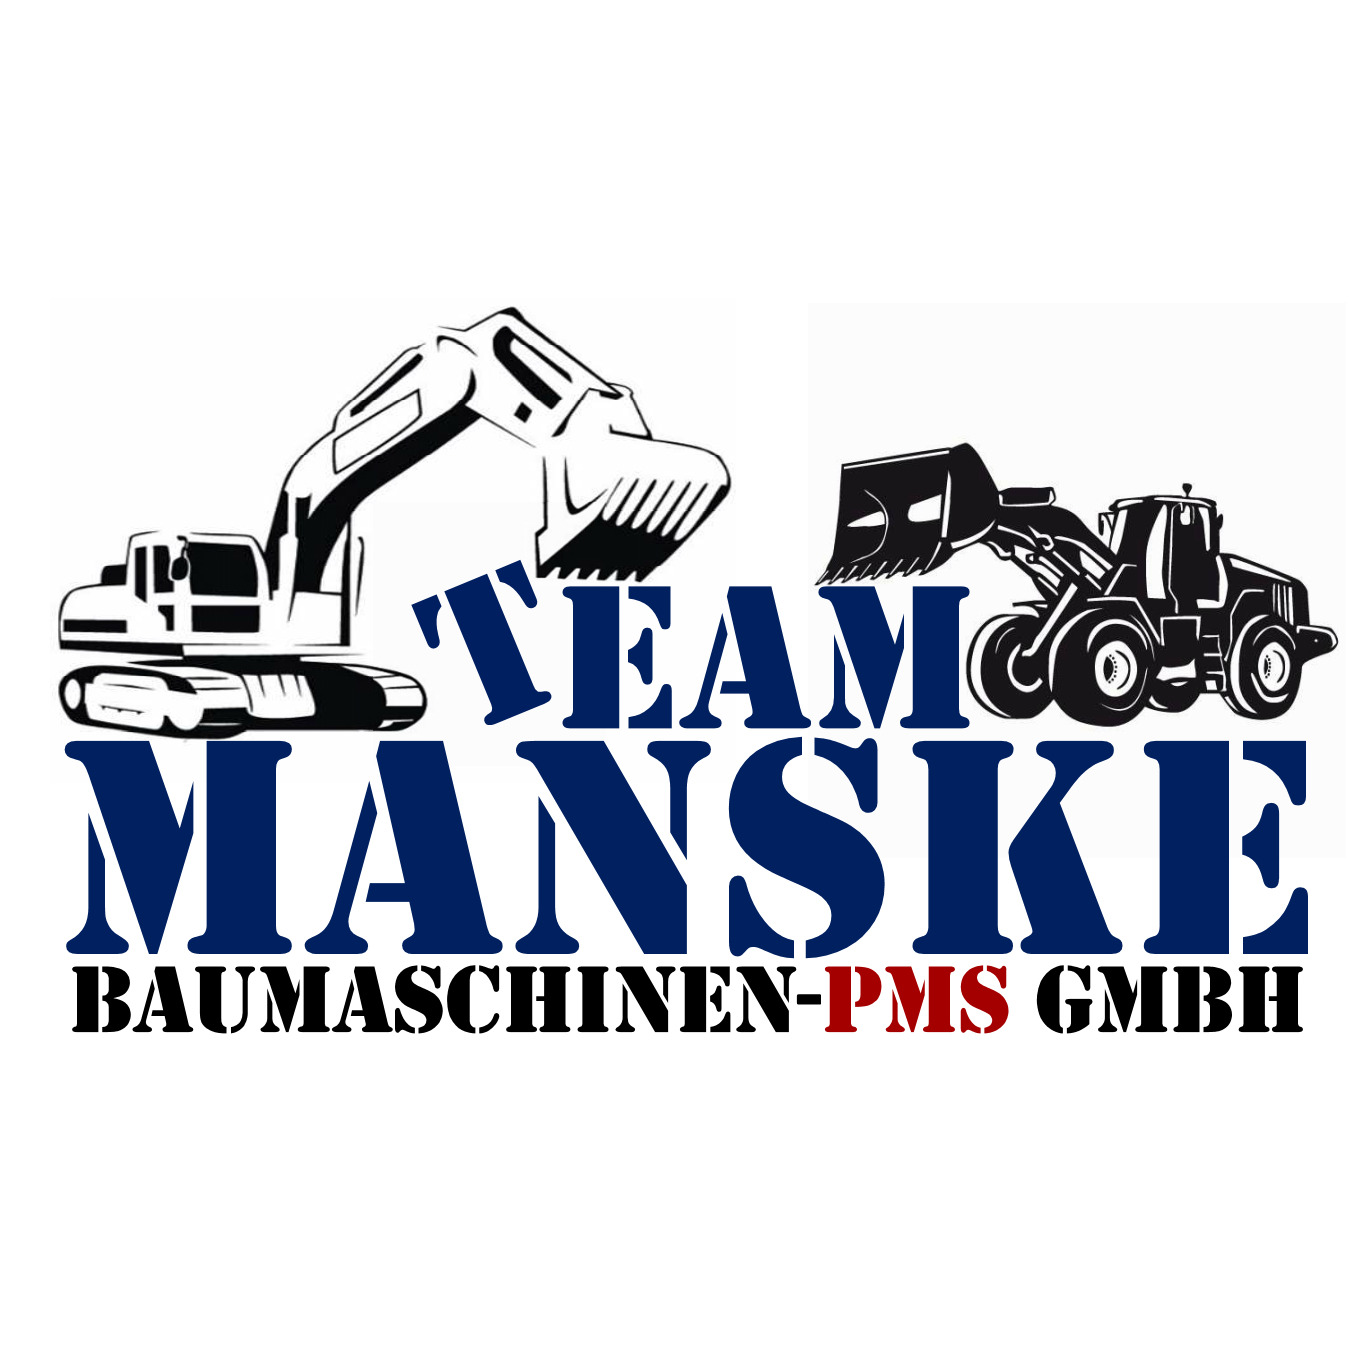 Manske Baumaschinen-PMS GmbH Logo